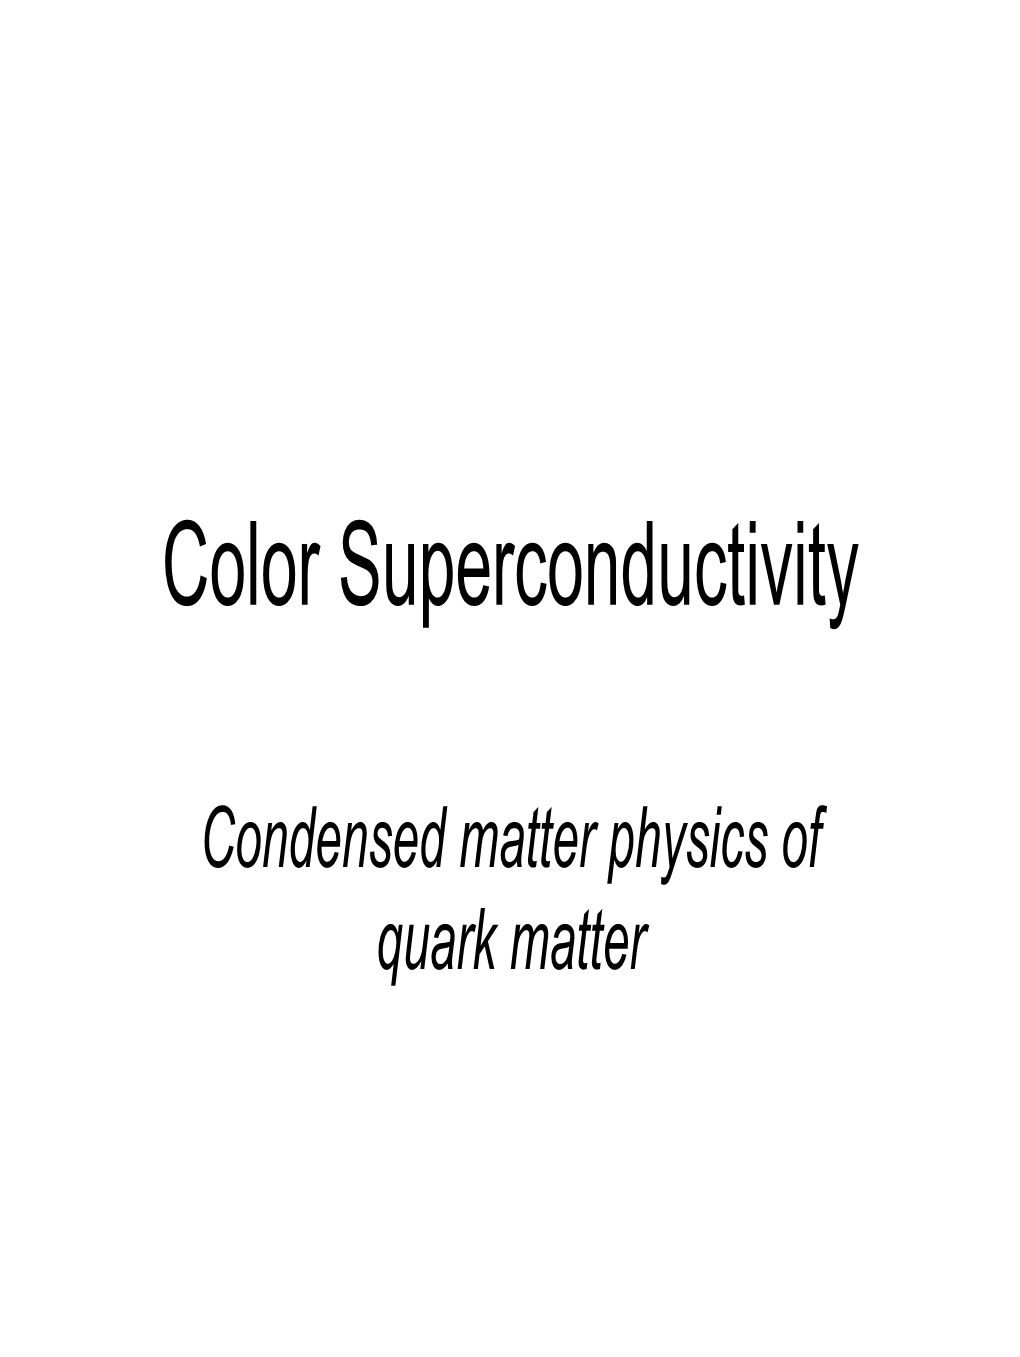 Color Superconductivity